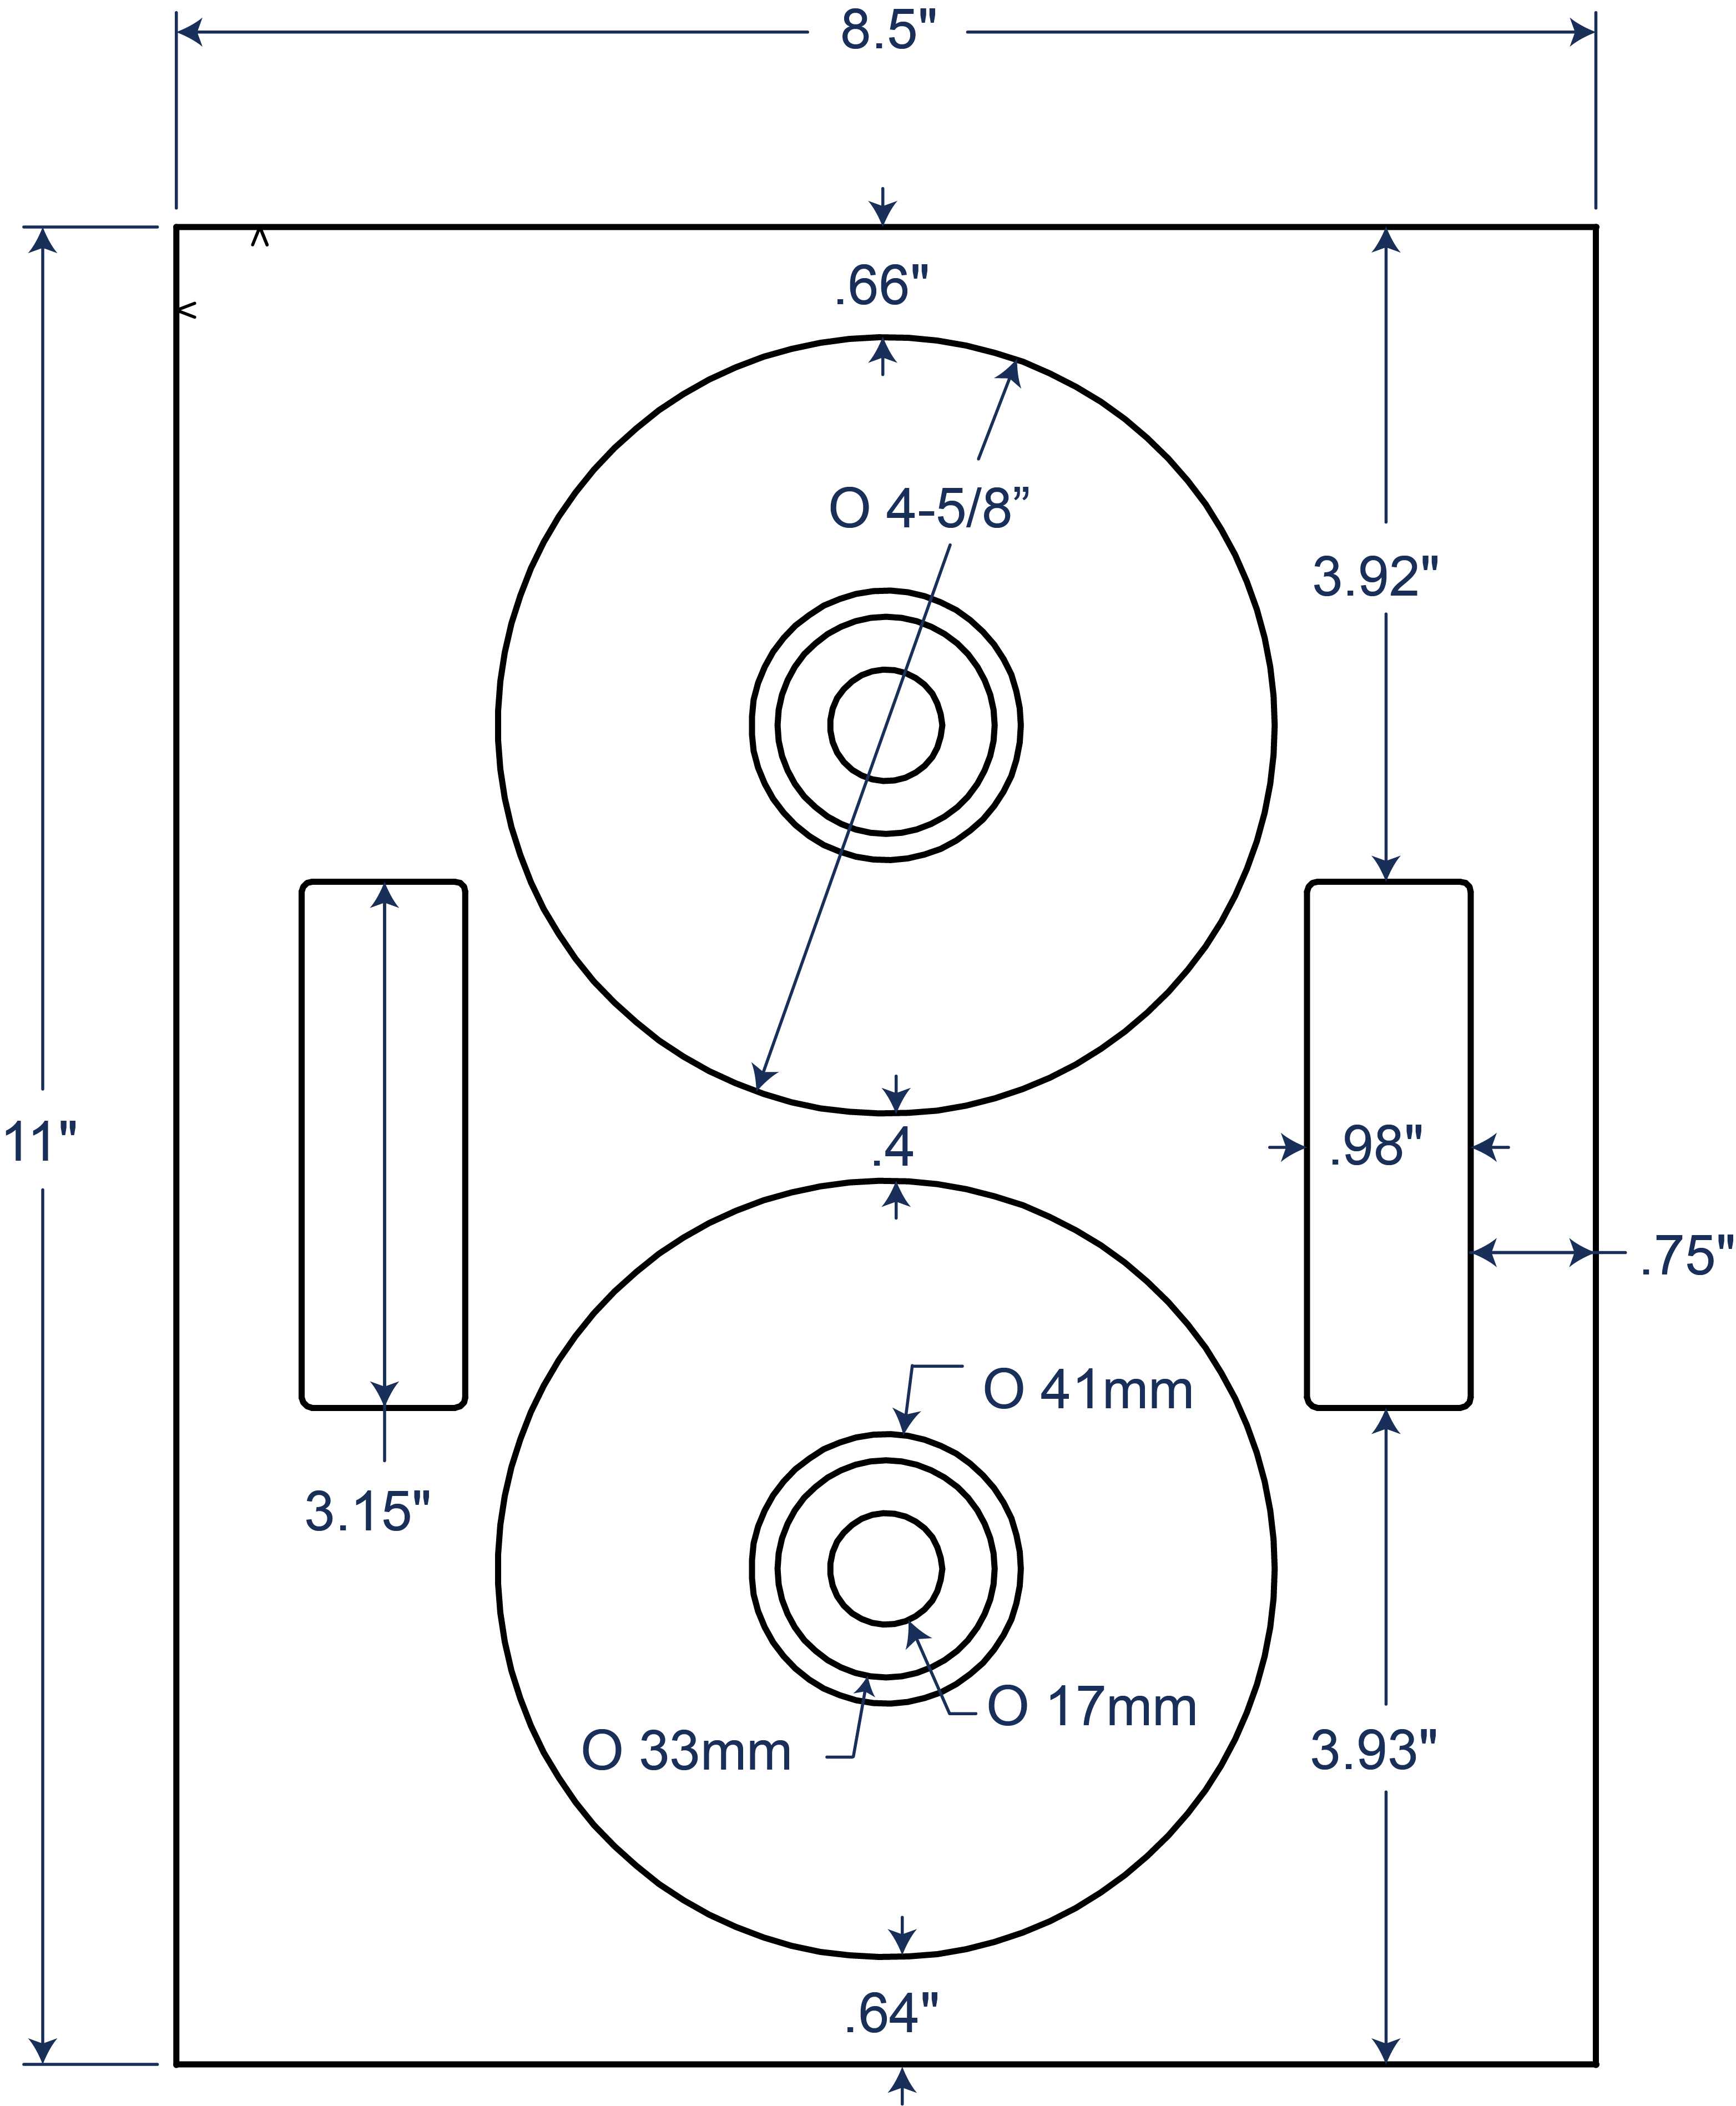 4-5/8" Diameter Laser/Inkjet Neato CD Donut with Hub Cap Labels